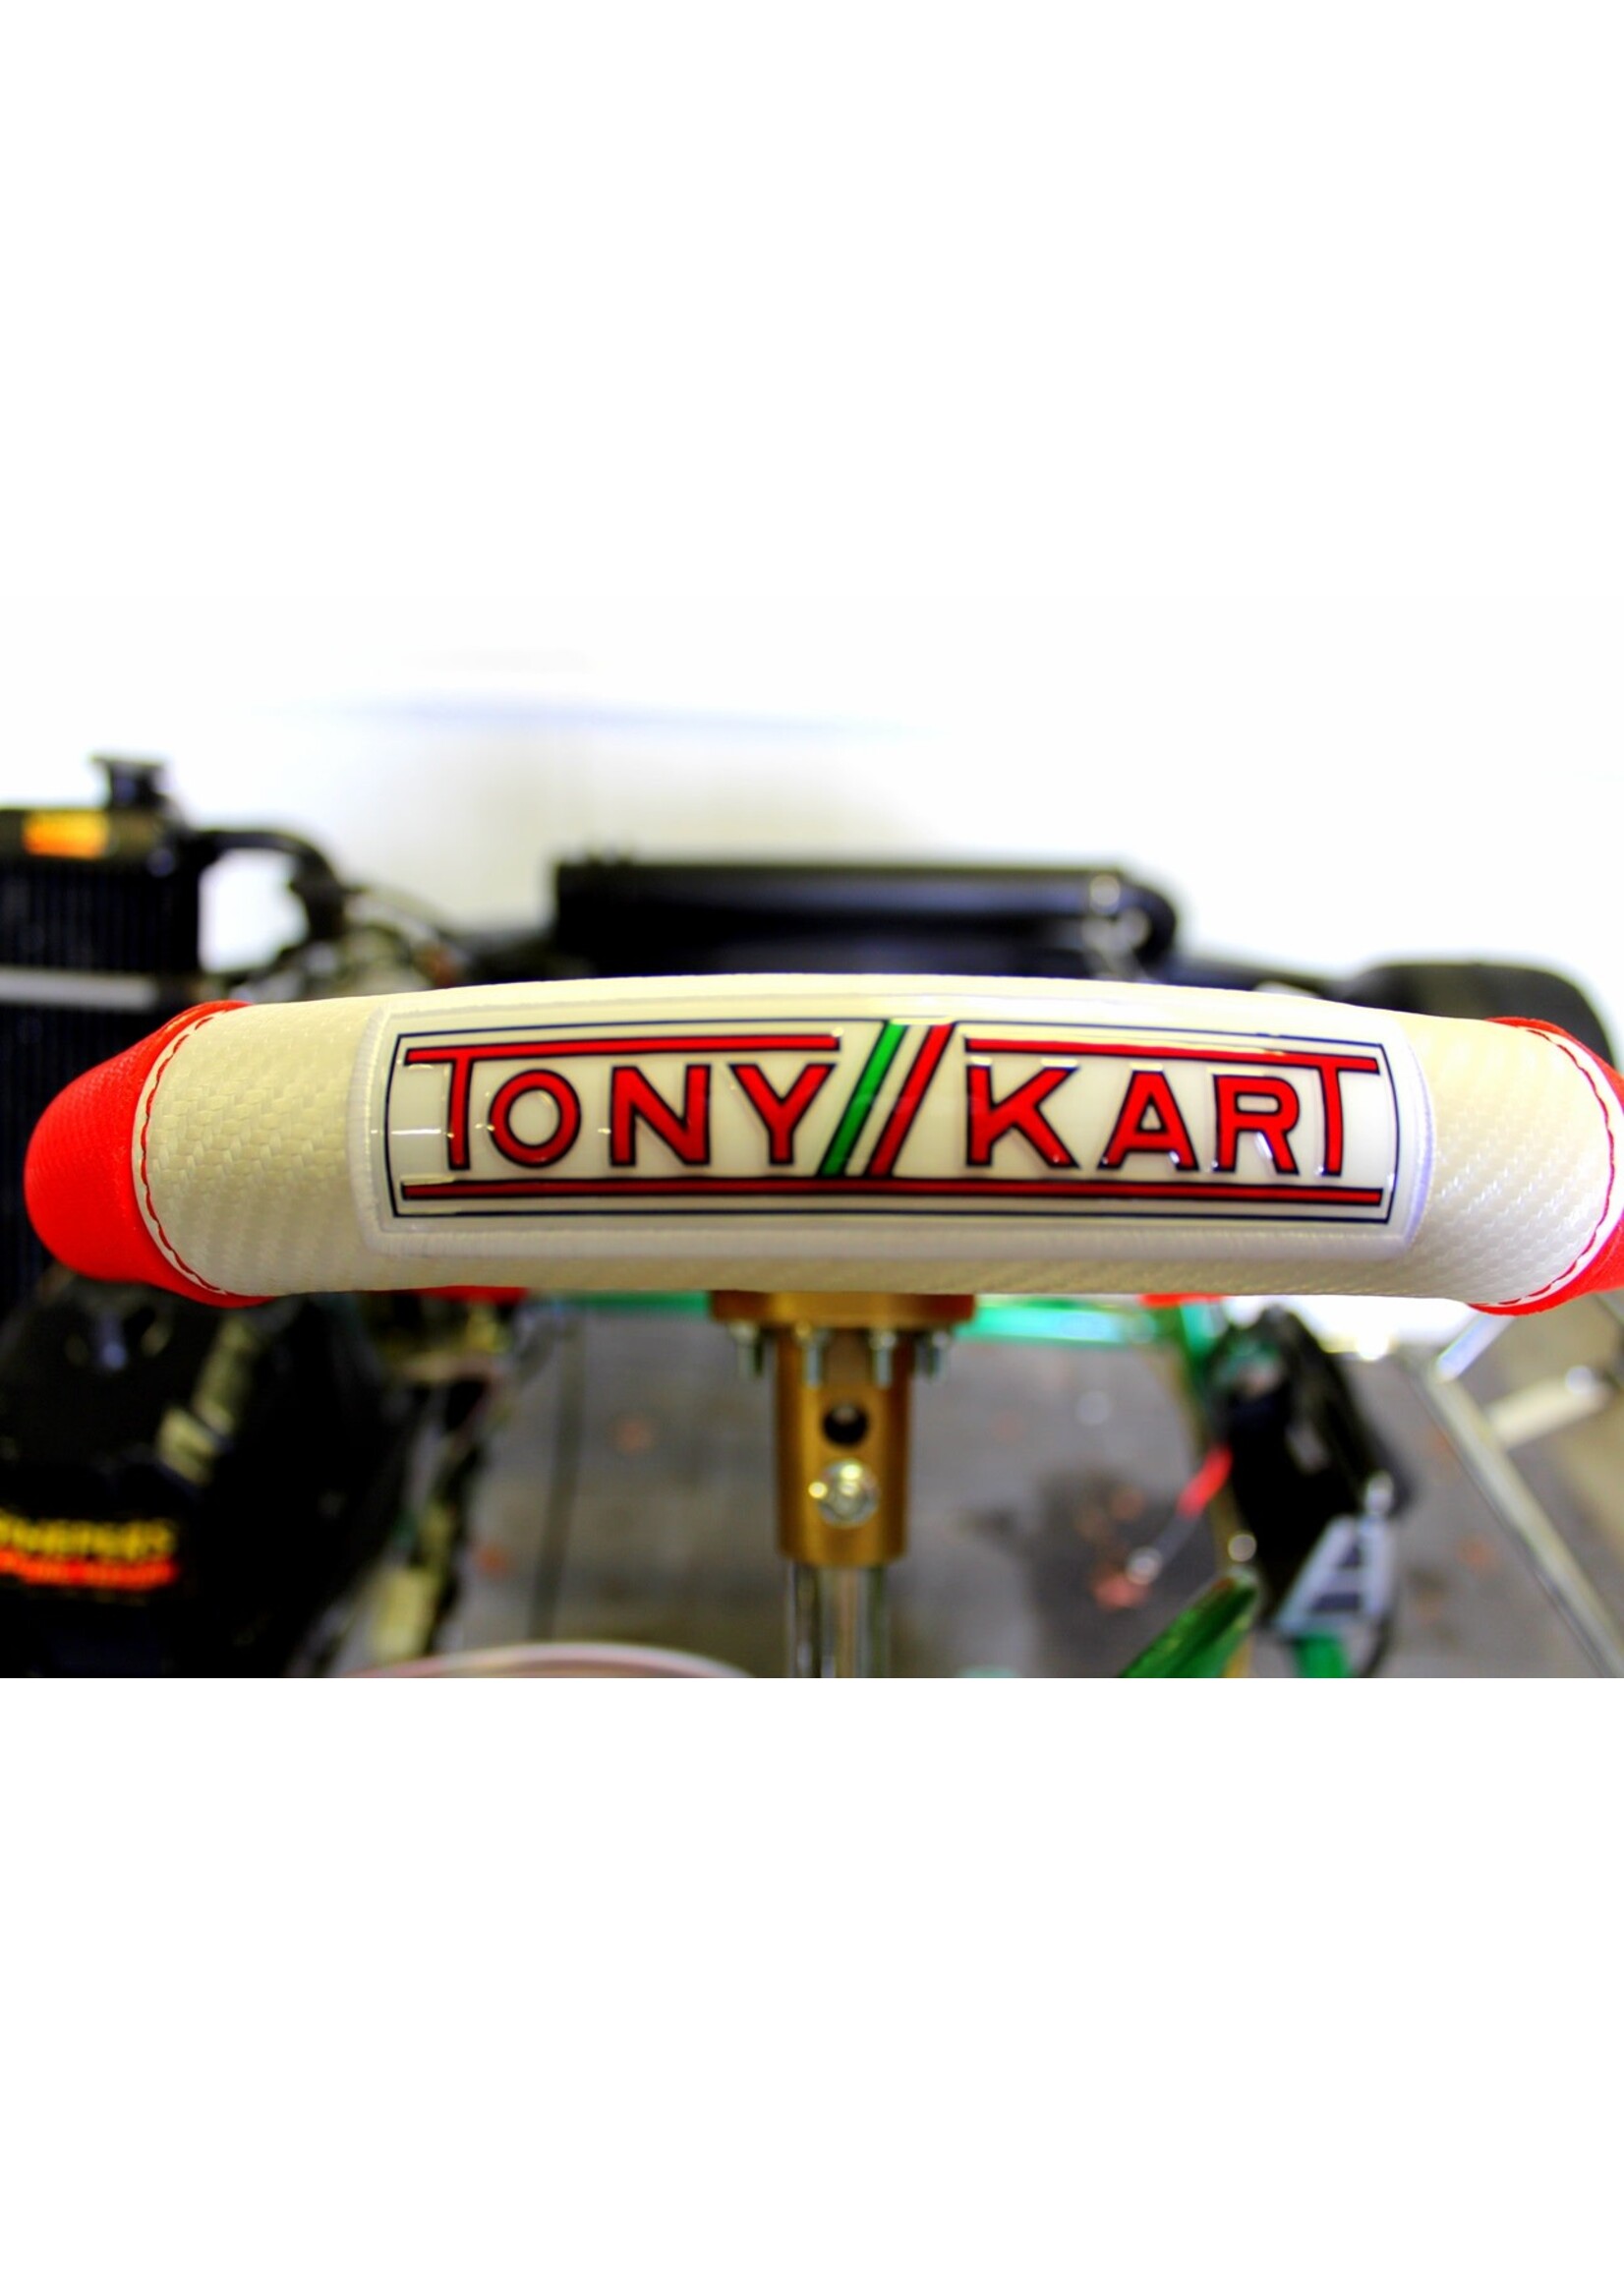 tonykart Tony Kart with Rotax Max Senior Engin